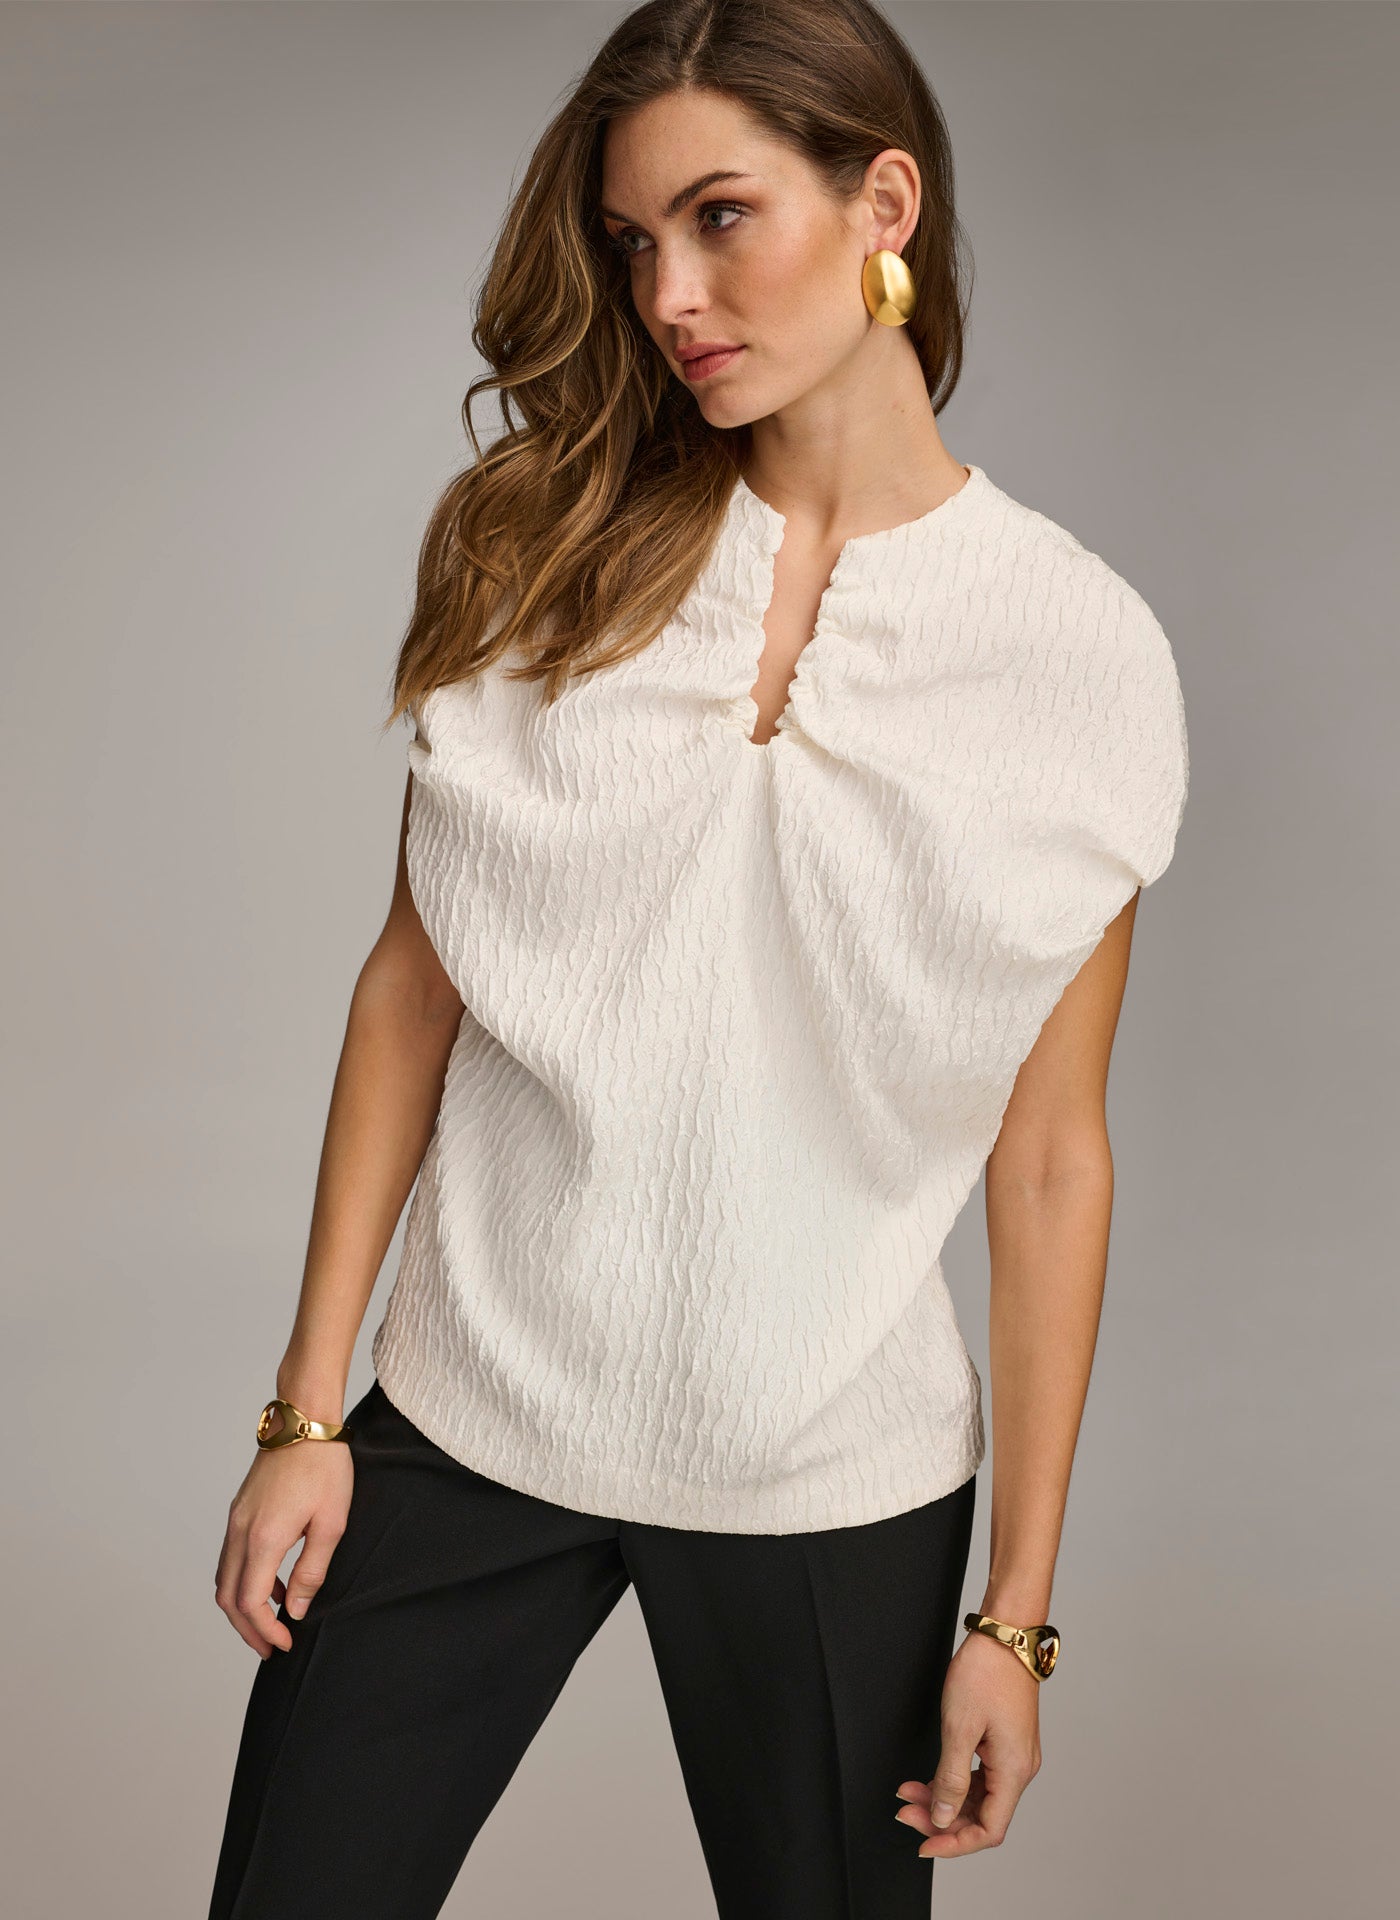 DKNY Donna Karan NY Sweater Tank Top MEDIUM Onyx Black Knit Form Fitting  Cotton